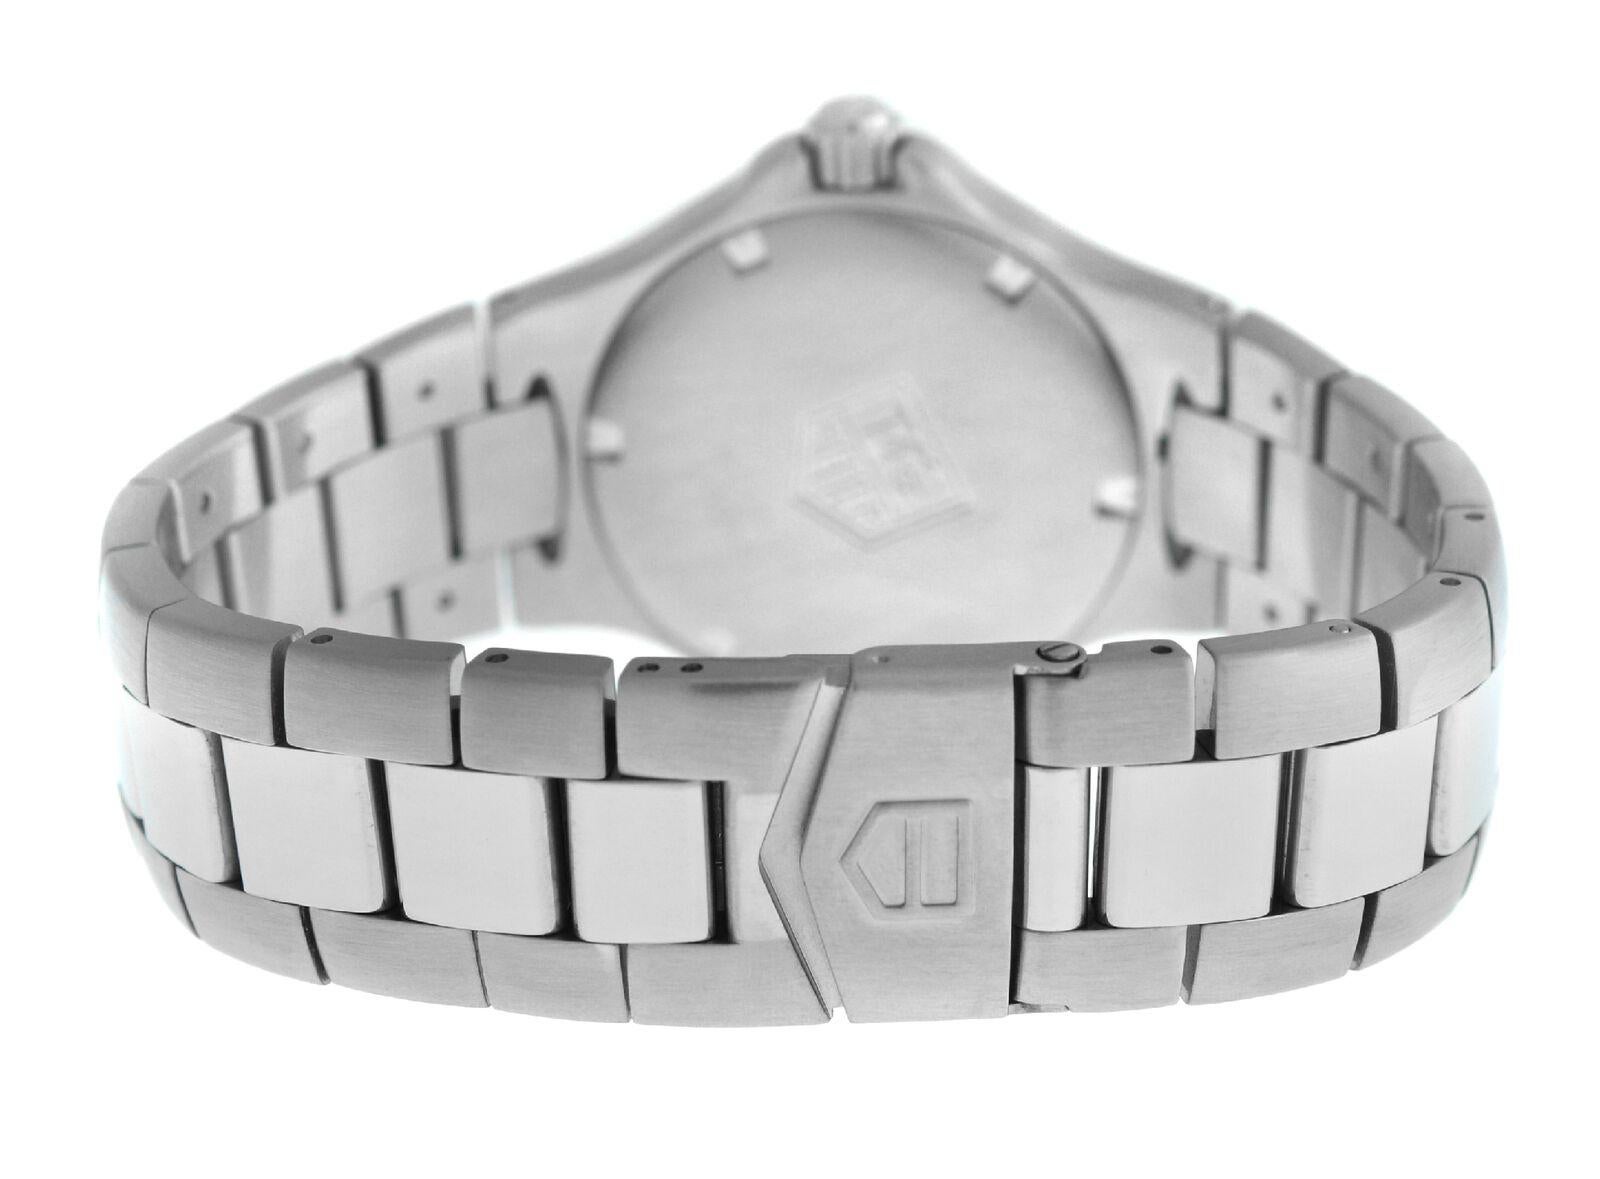 Unisex TAG Heuer Kirium WL1211-0 Stainless Steel Date 200M Quartz Watch For Sale 1